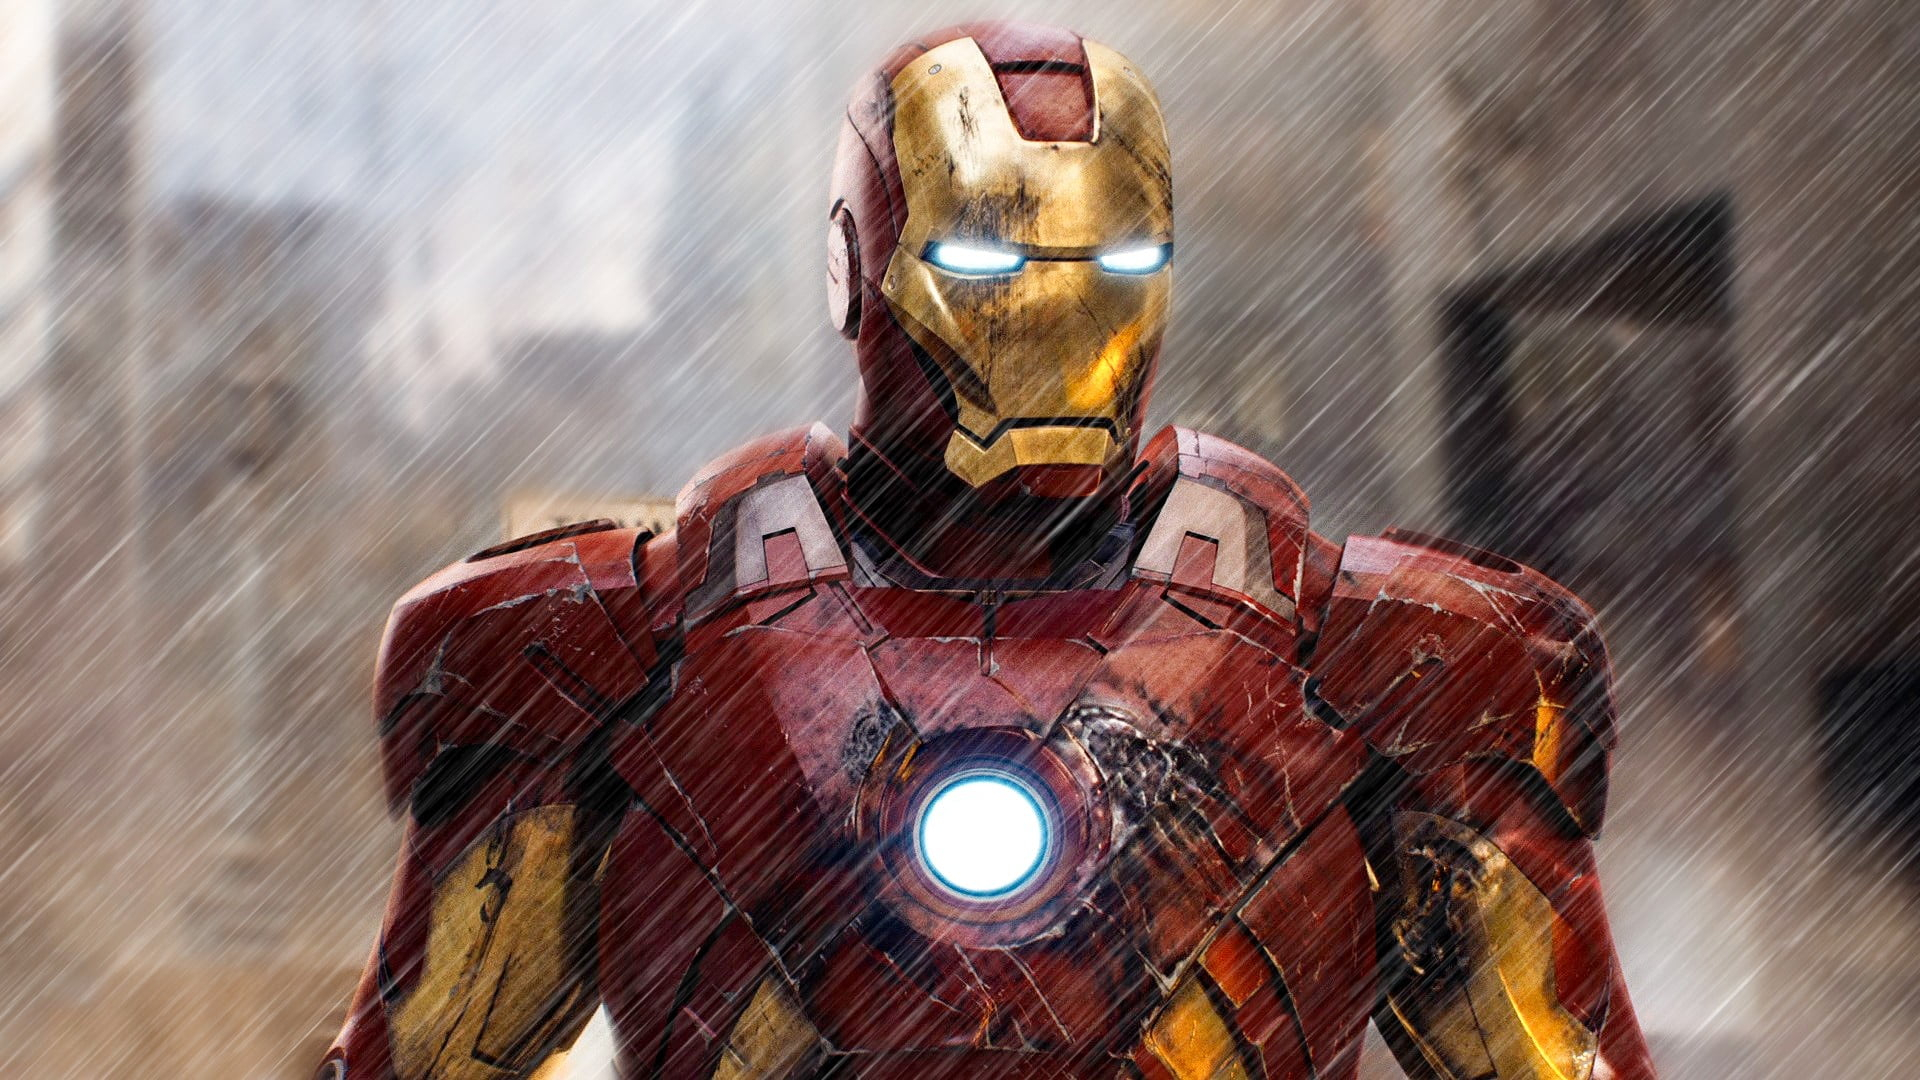 Iron-Man digital wallpaper, Iron Man, Marvel Comics, superhero